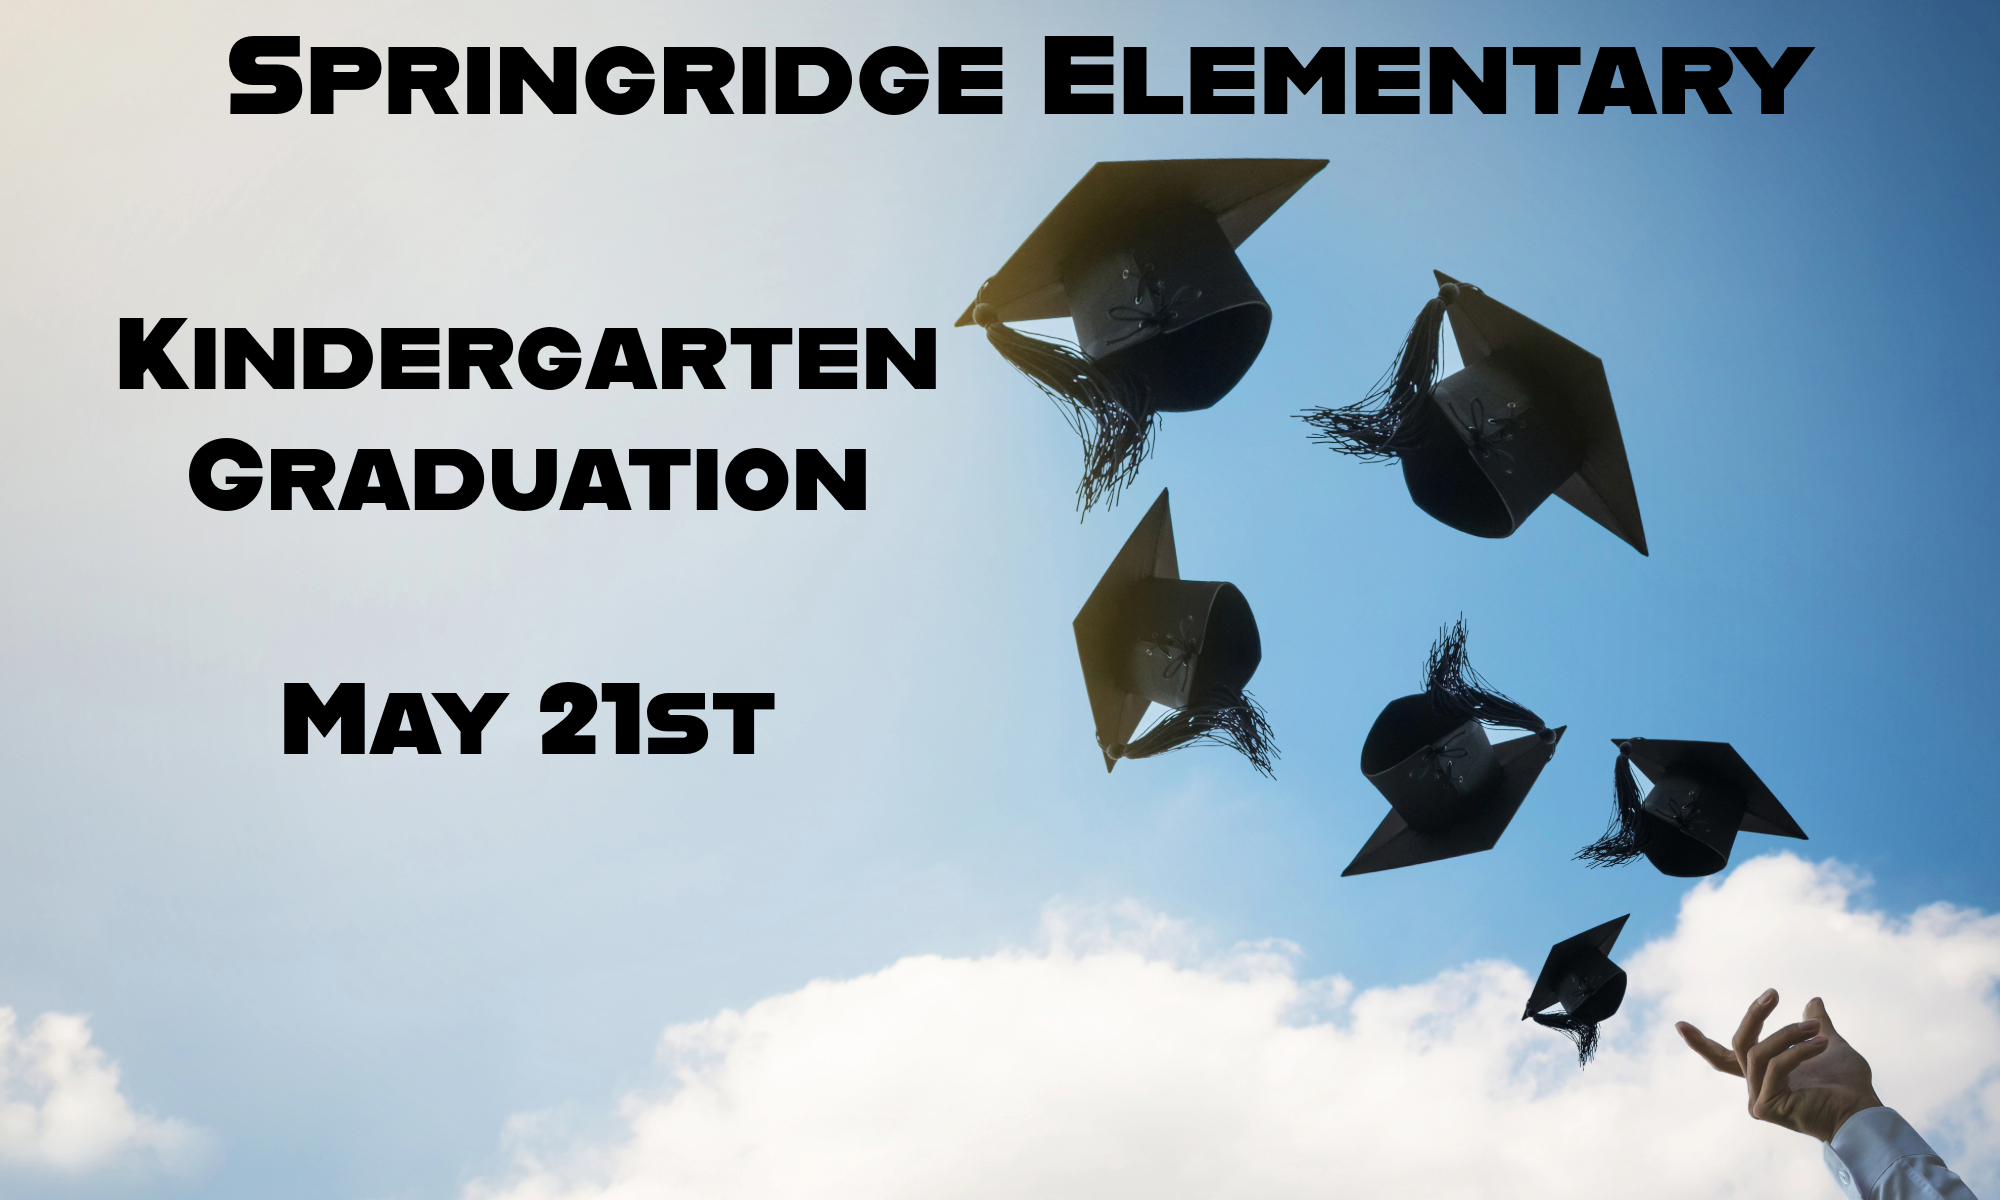 Springridge Elementary Kindergarten Graduation May 21st